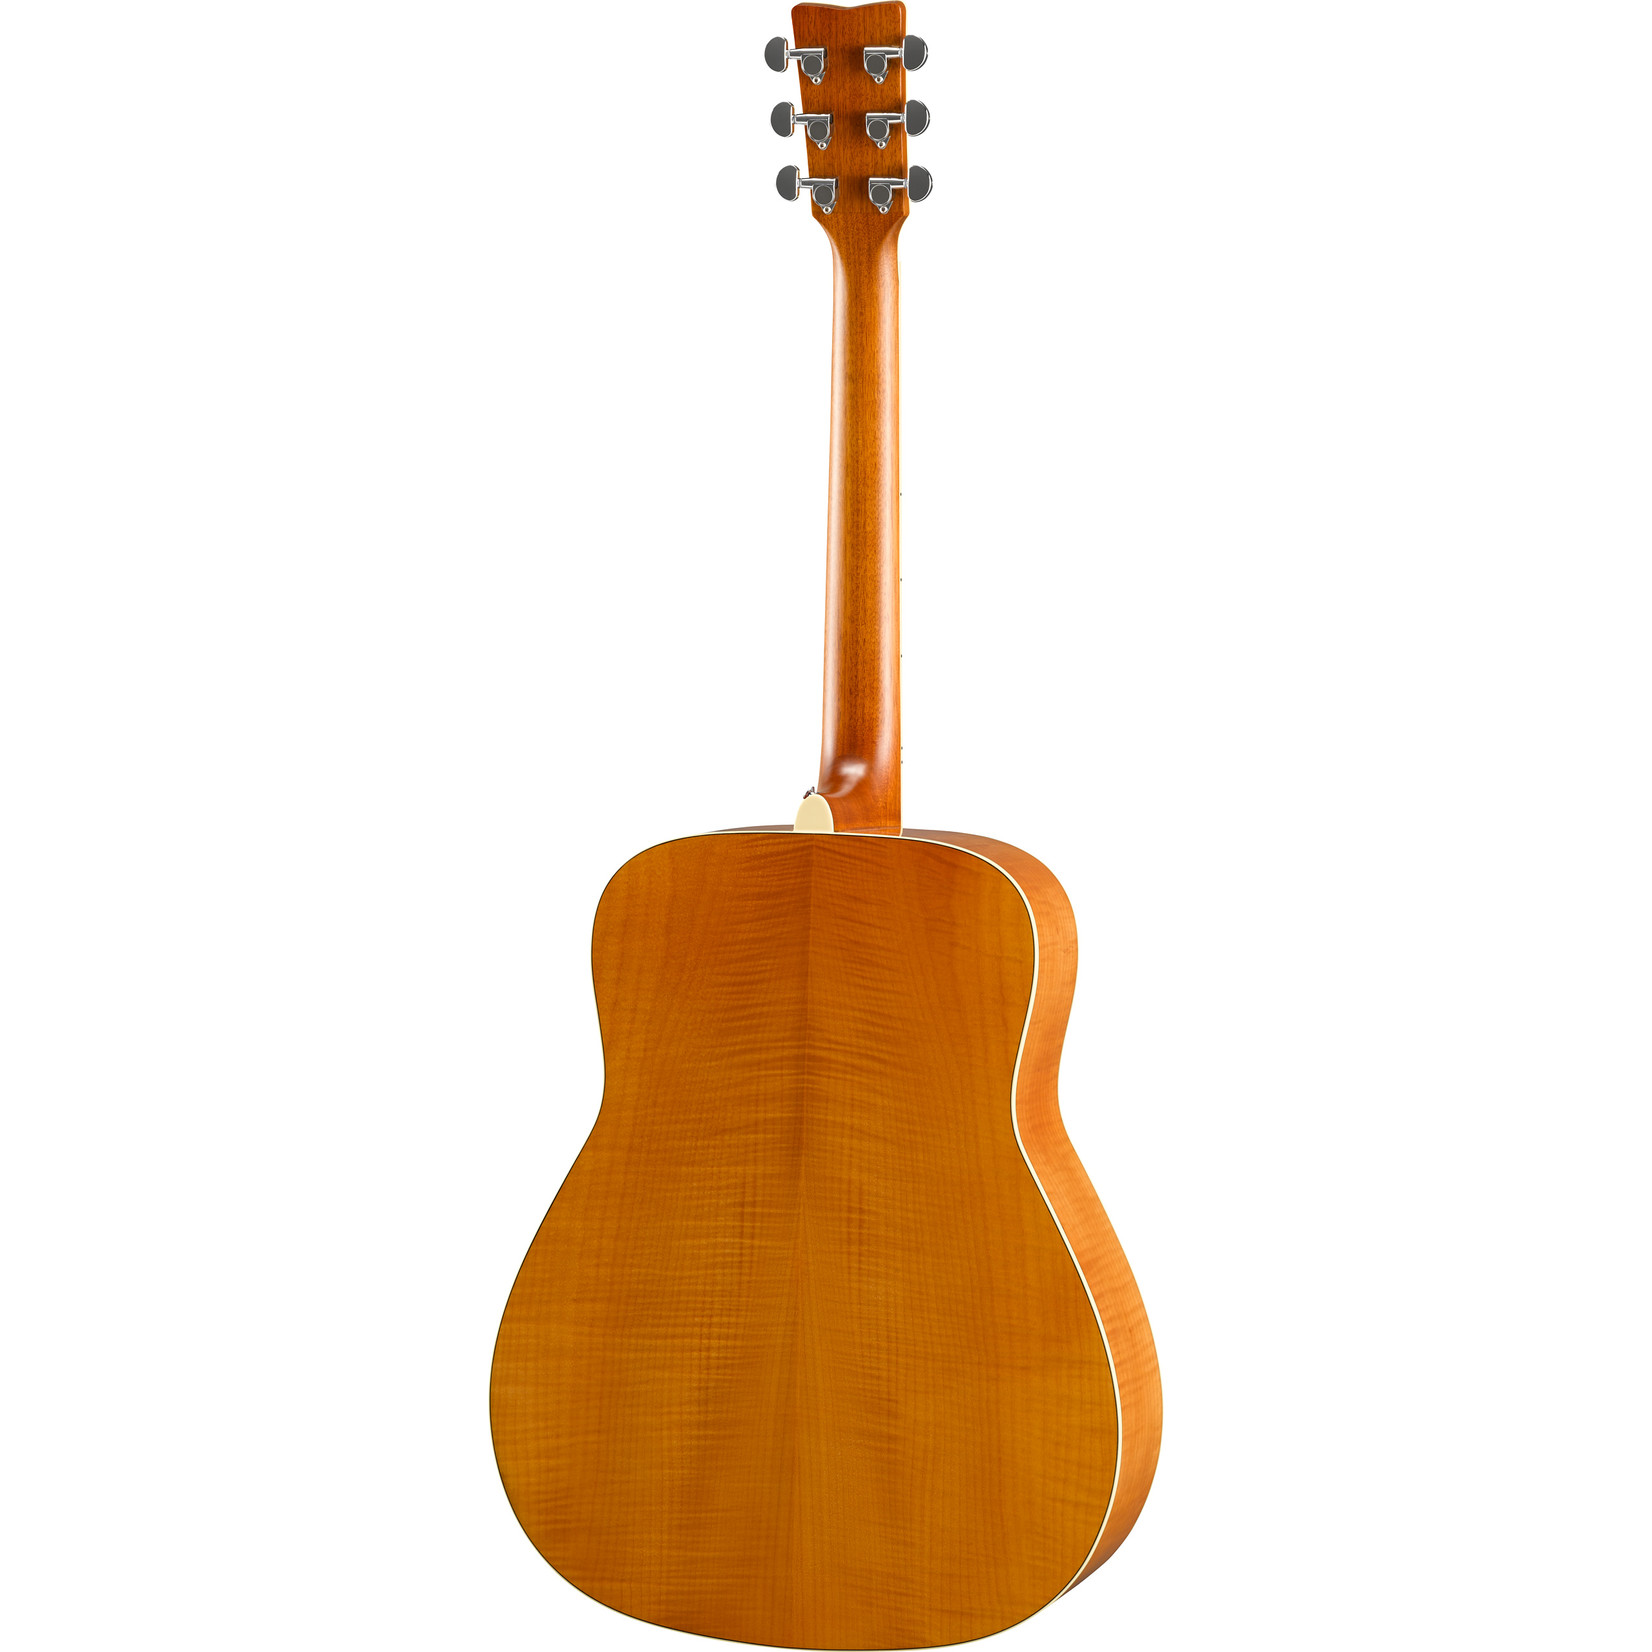 Yamaha Yamaha FG840 Acoustic Guitar